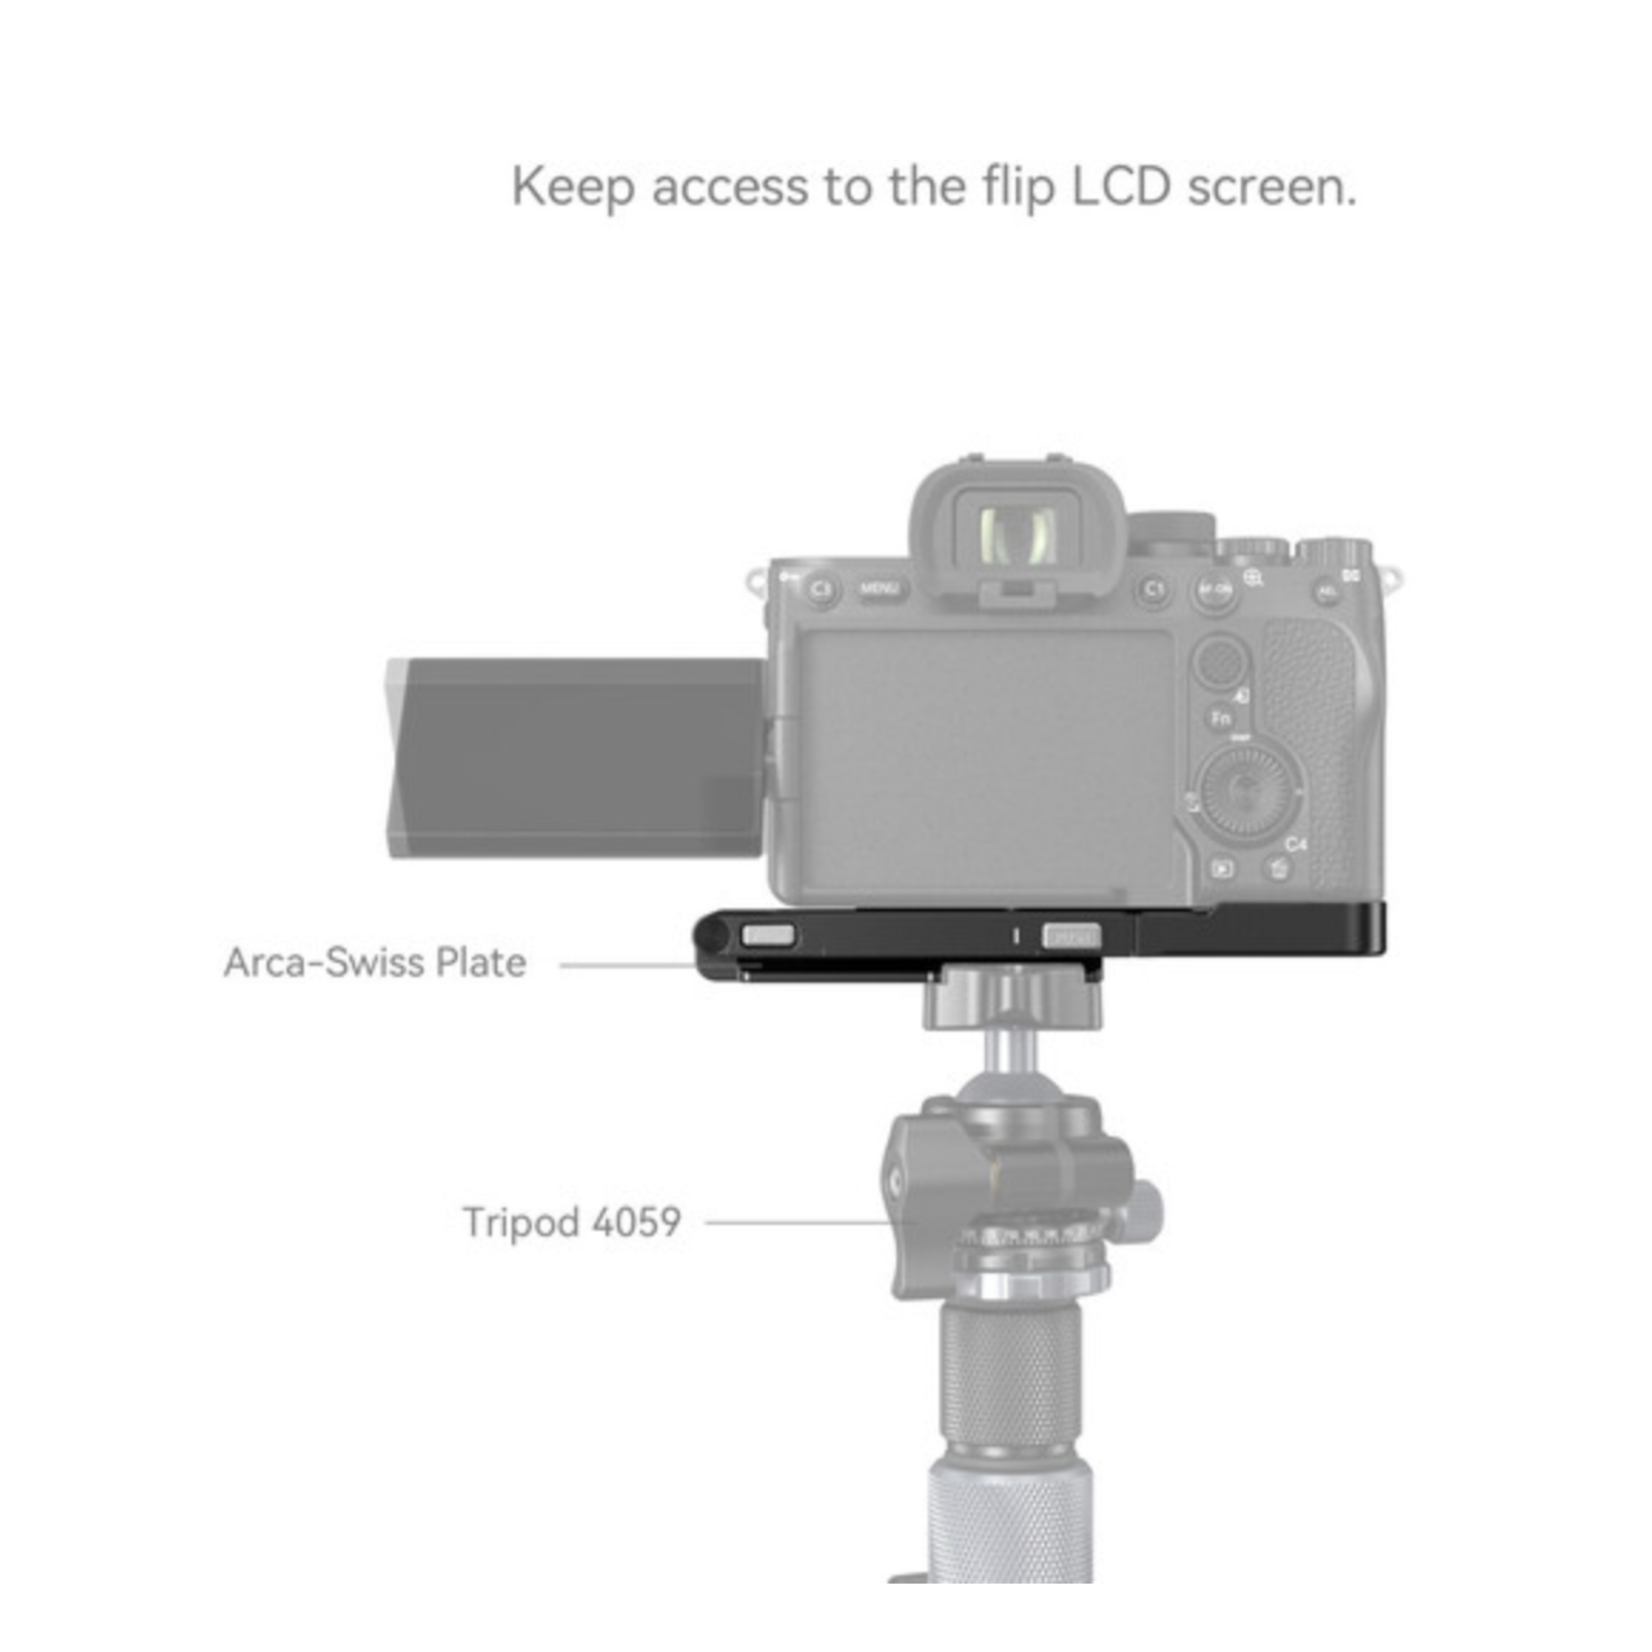 SmallRig SmallRig Foldable L-Bracket for Sony a7 IV, a7R V & a7S III